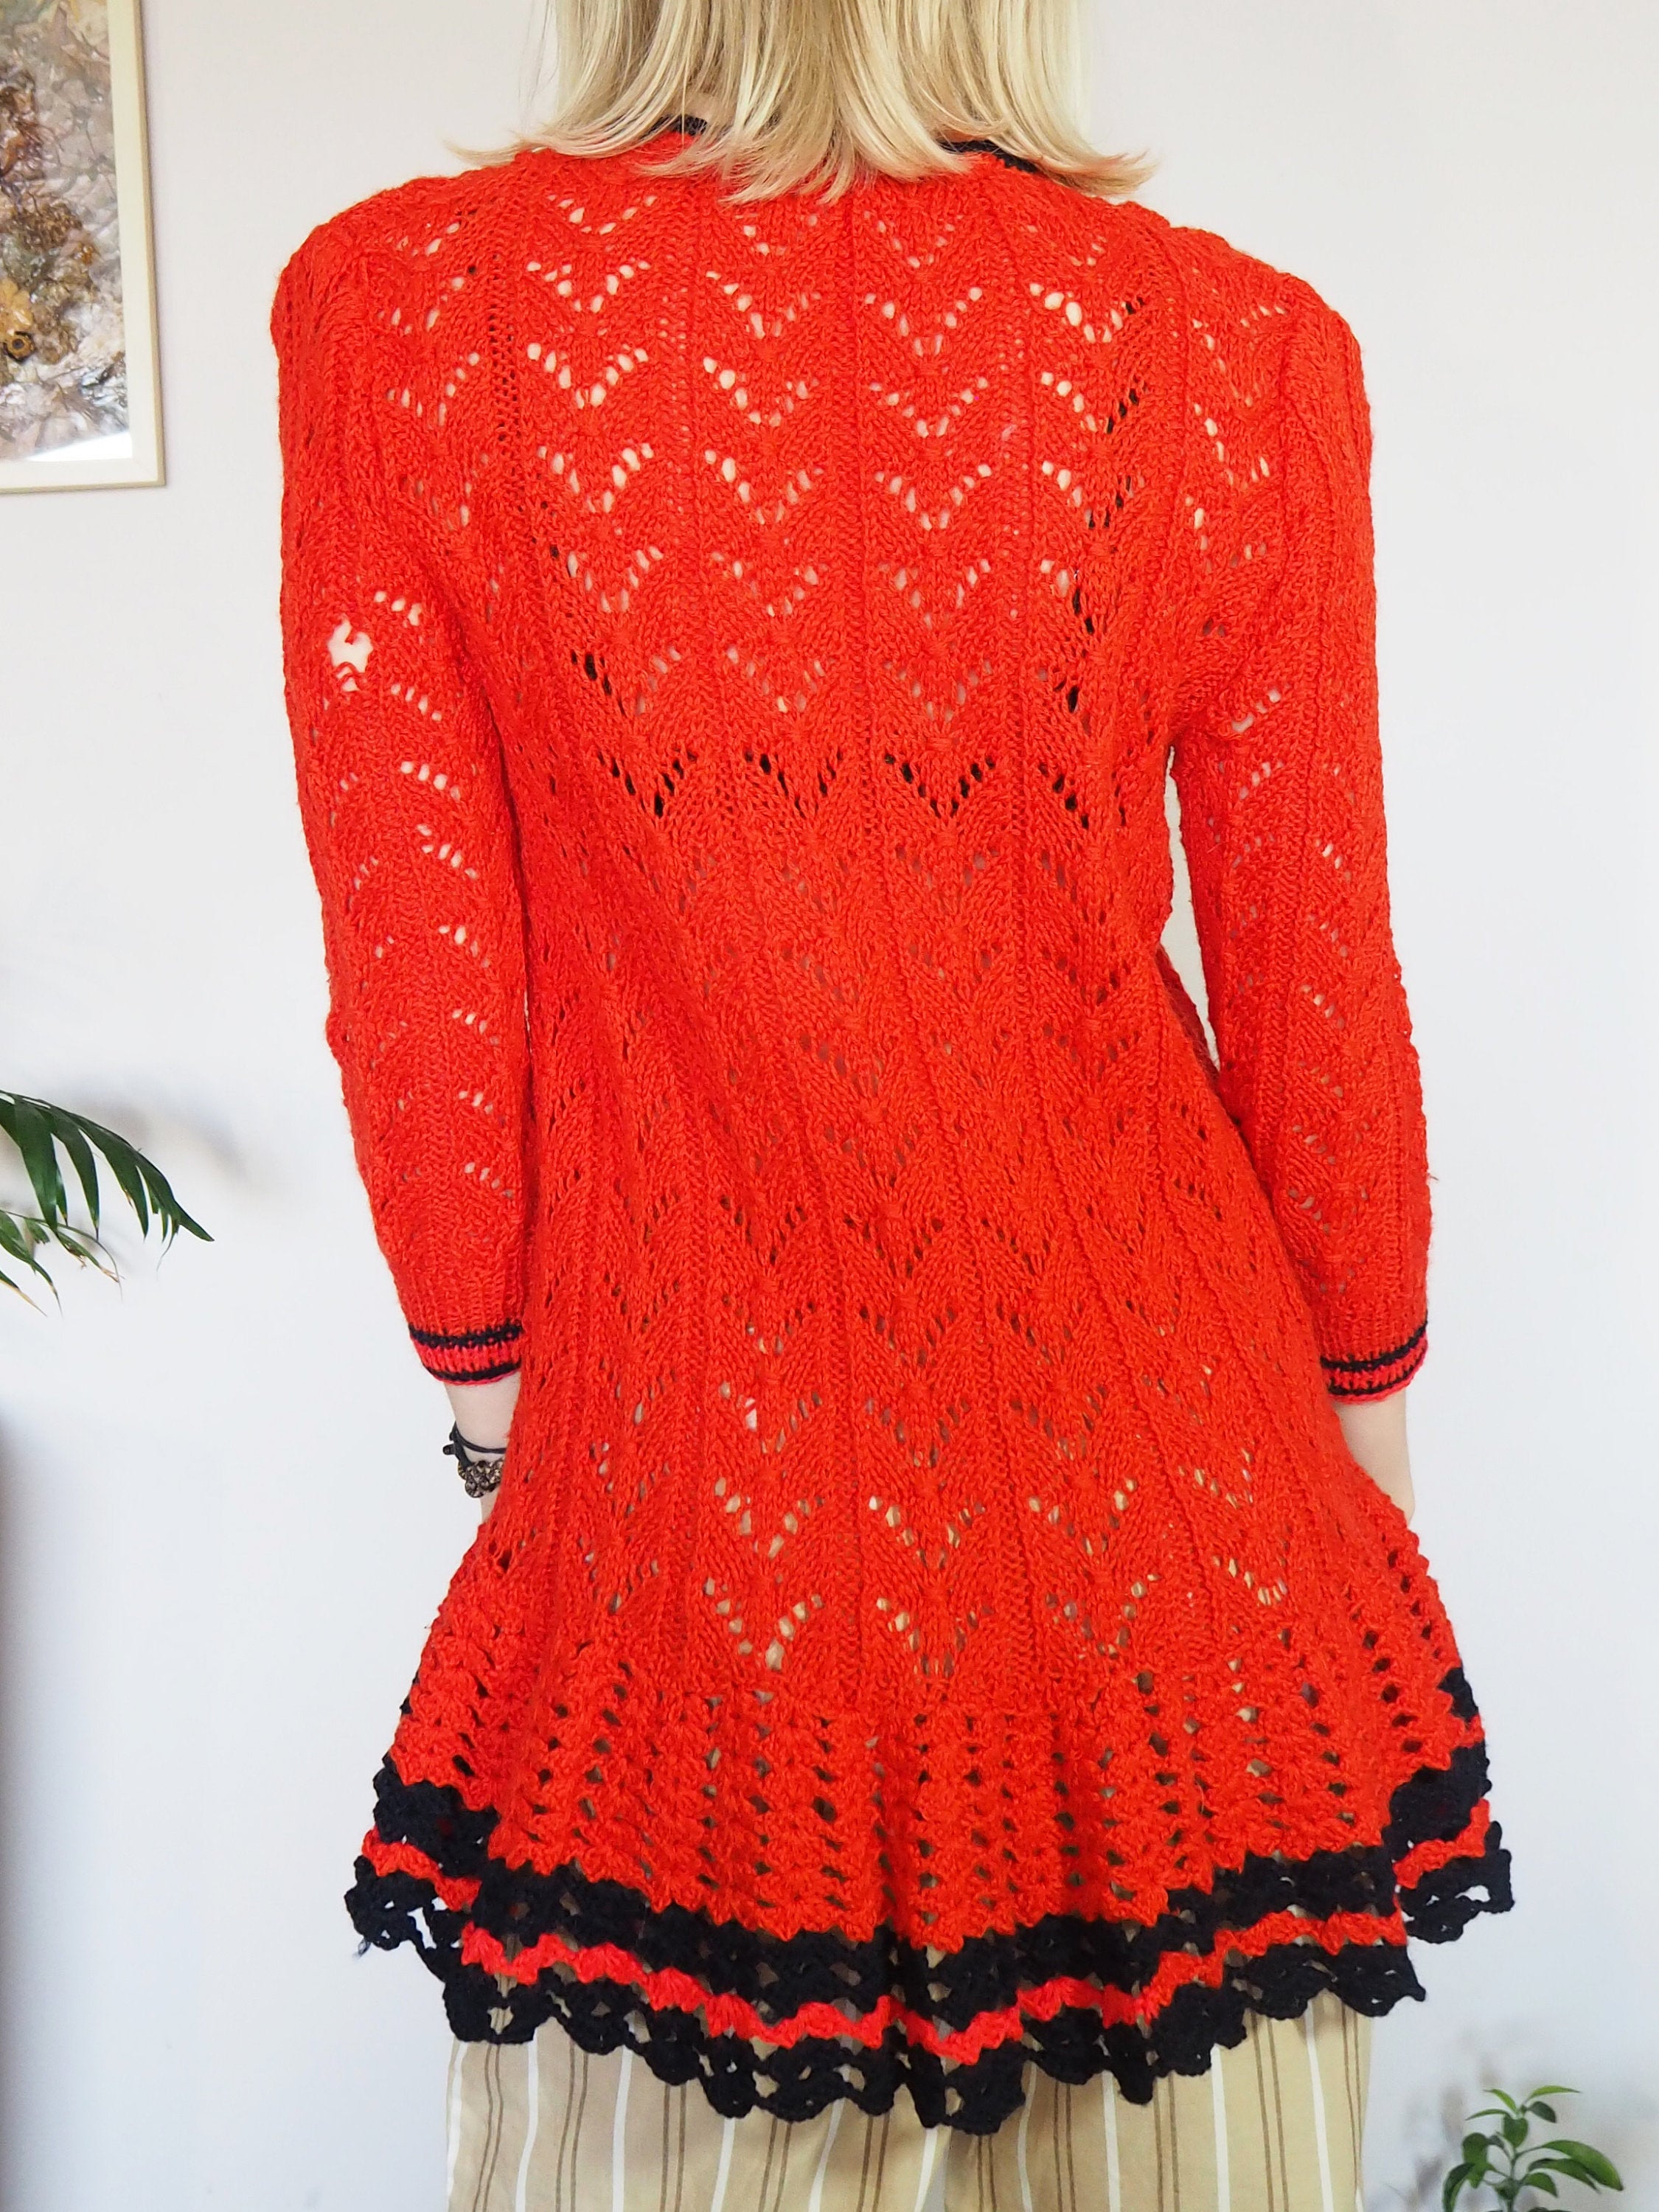 Vintage 70s minimalist knit red crochet handmade tunic top